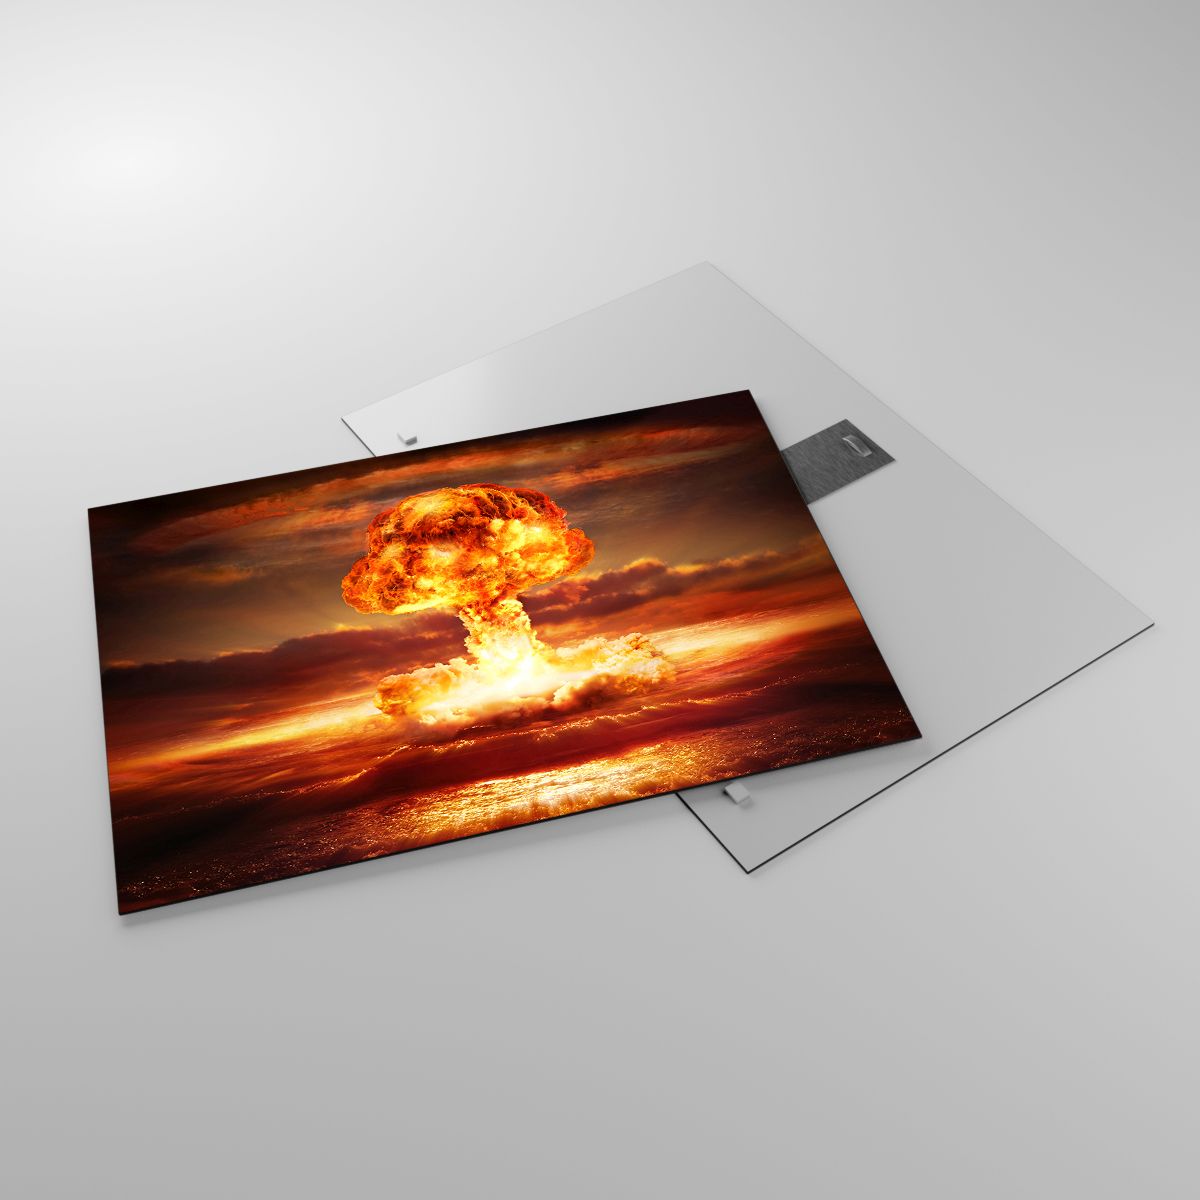 Glasbild Atombombe, Glasbild Militär, Glasbild Grafik, Glasbild Apokalypse, Glasbild Krieg